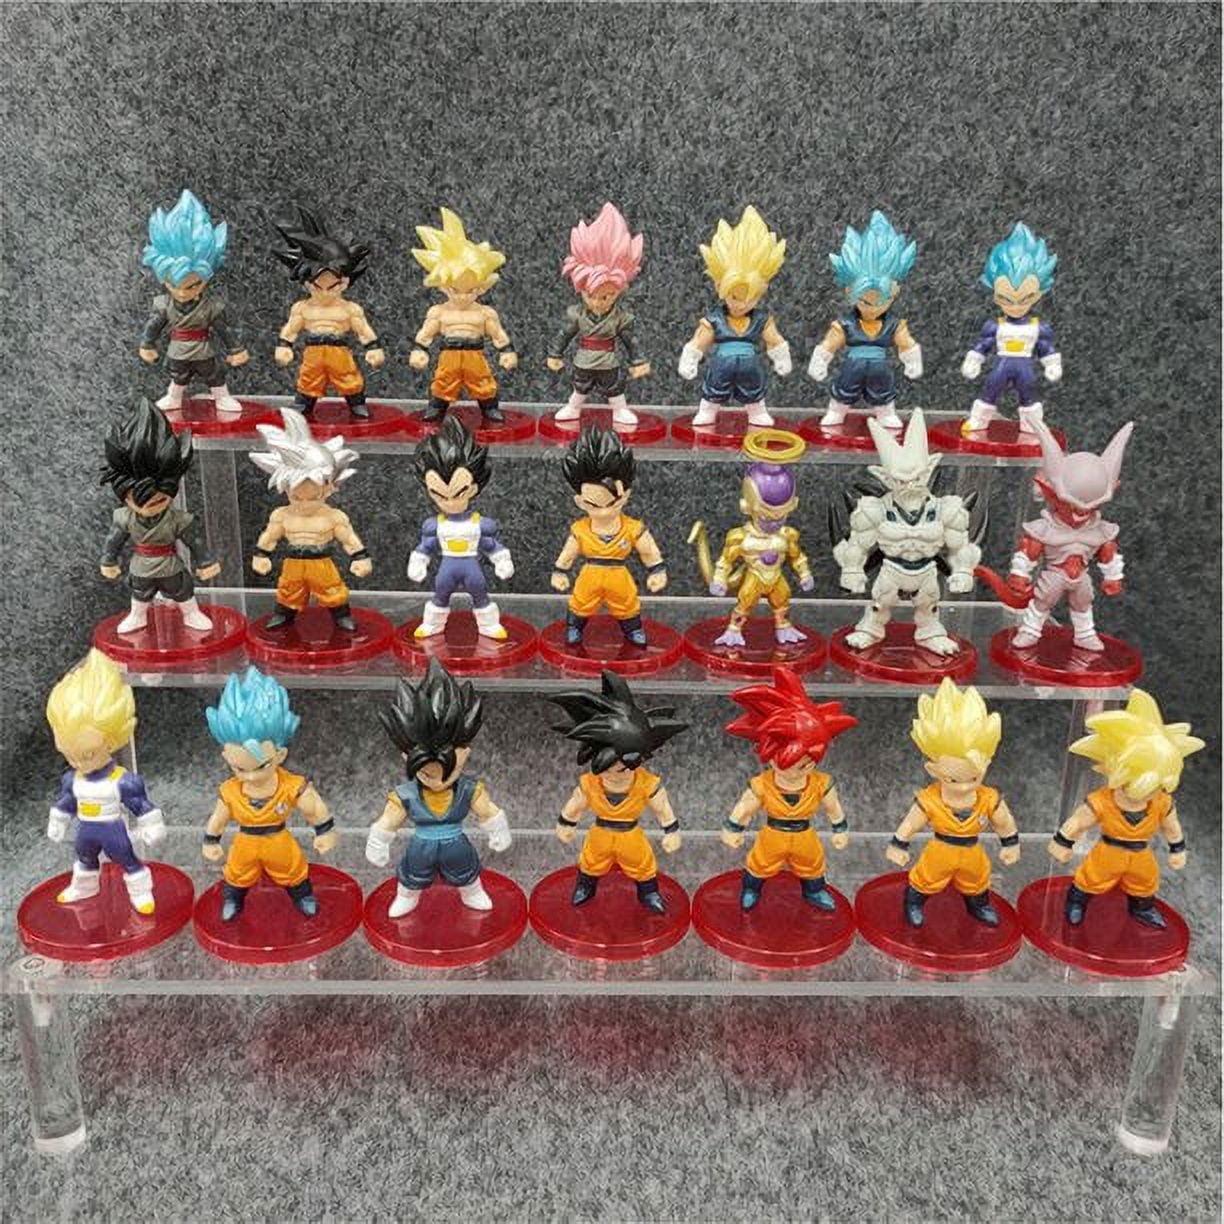 32 Pcs/Lot Anime Dragon Ball Z Cards Goku Vegeta Frieza Majin Buu Broli  Piccolo Action Figures Trading Collection Kid Gift Toy - AliExpress